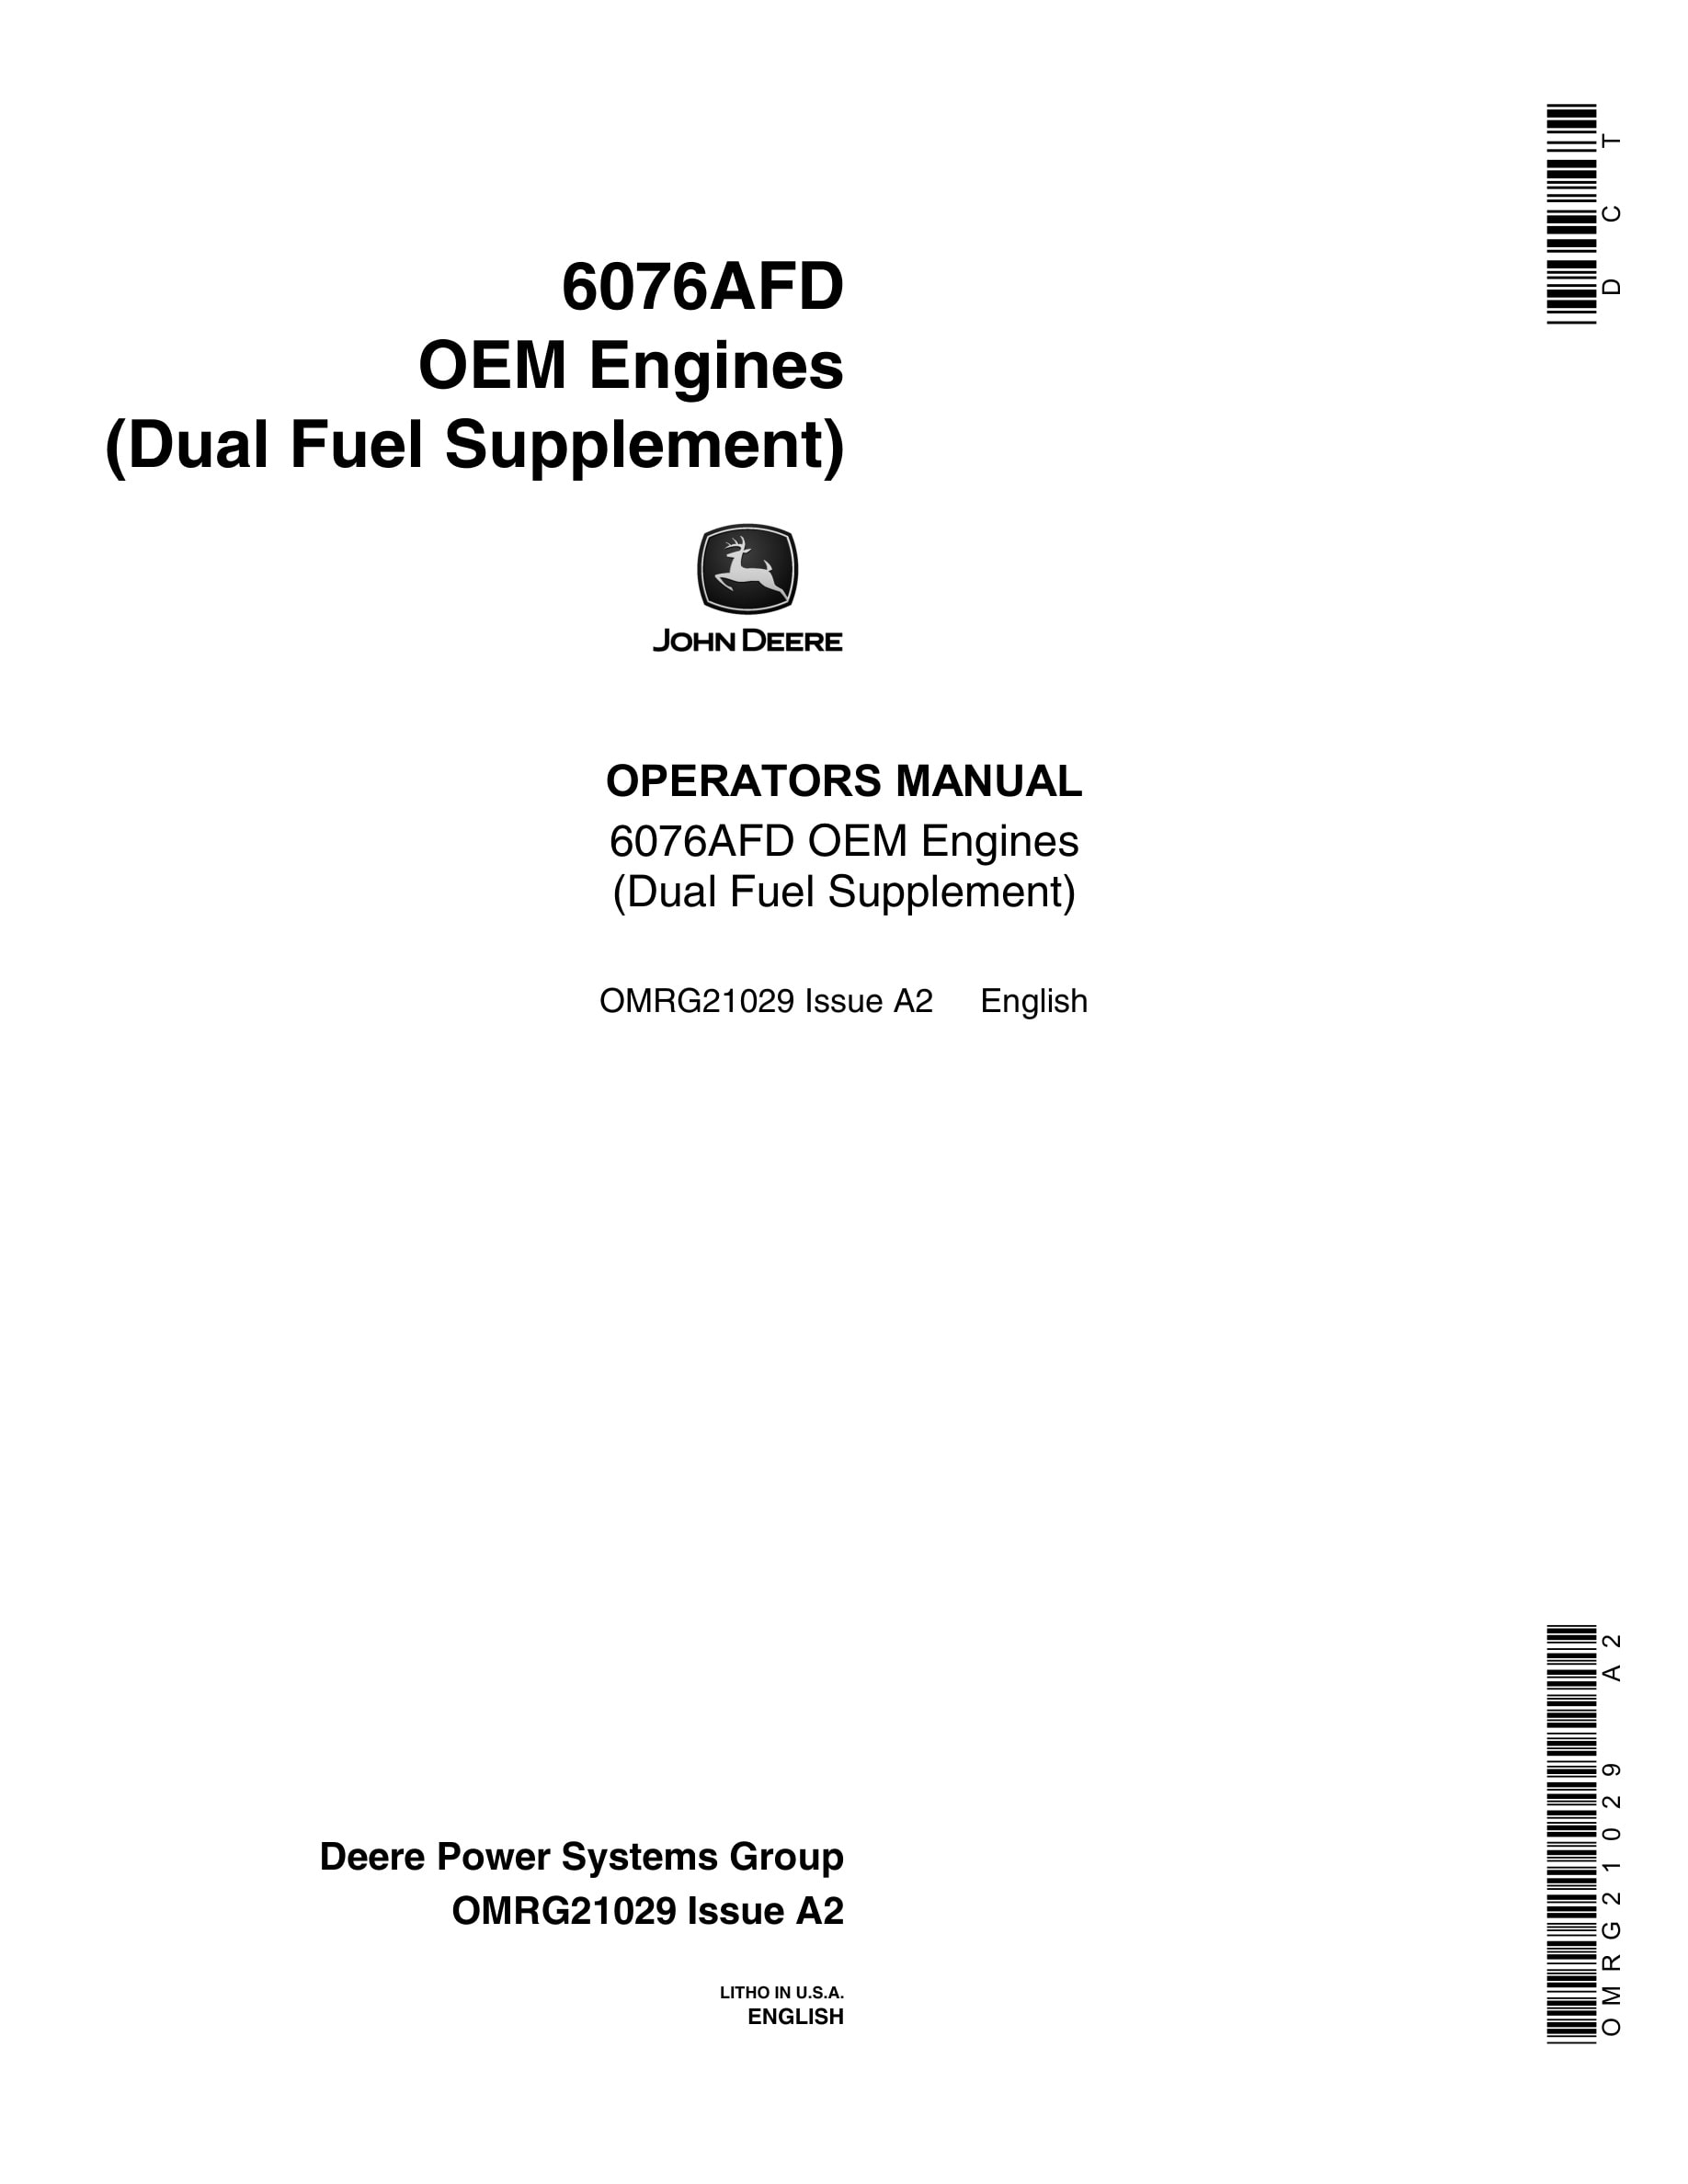 John Deere PowerTech 6076AFD OEM Engines Operator Manual OMRG21029-1